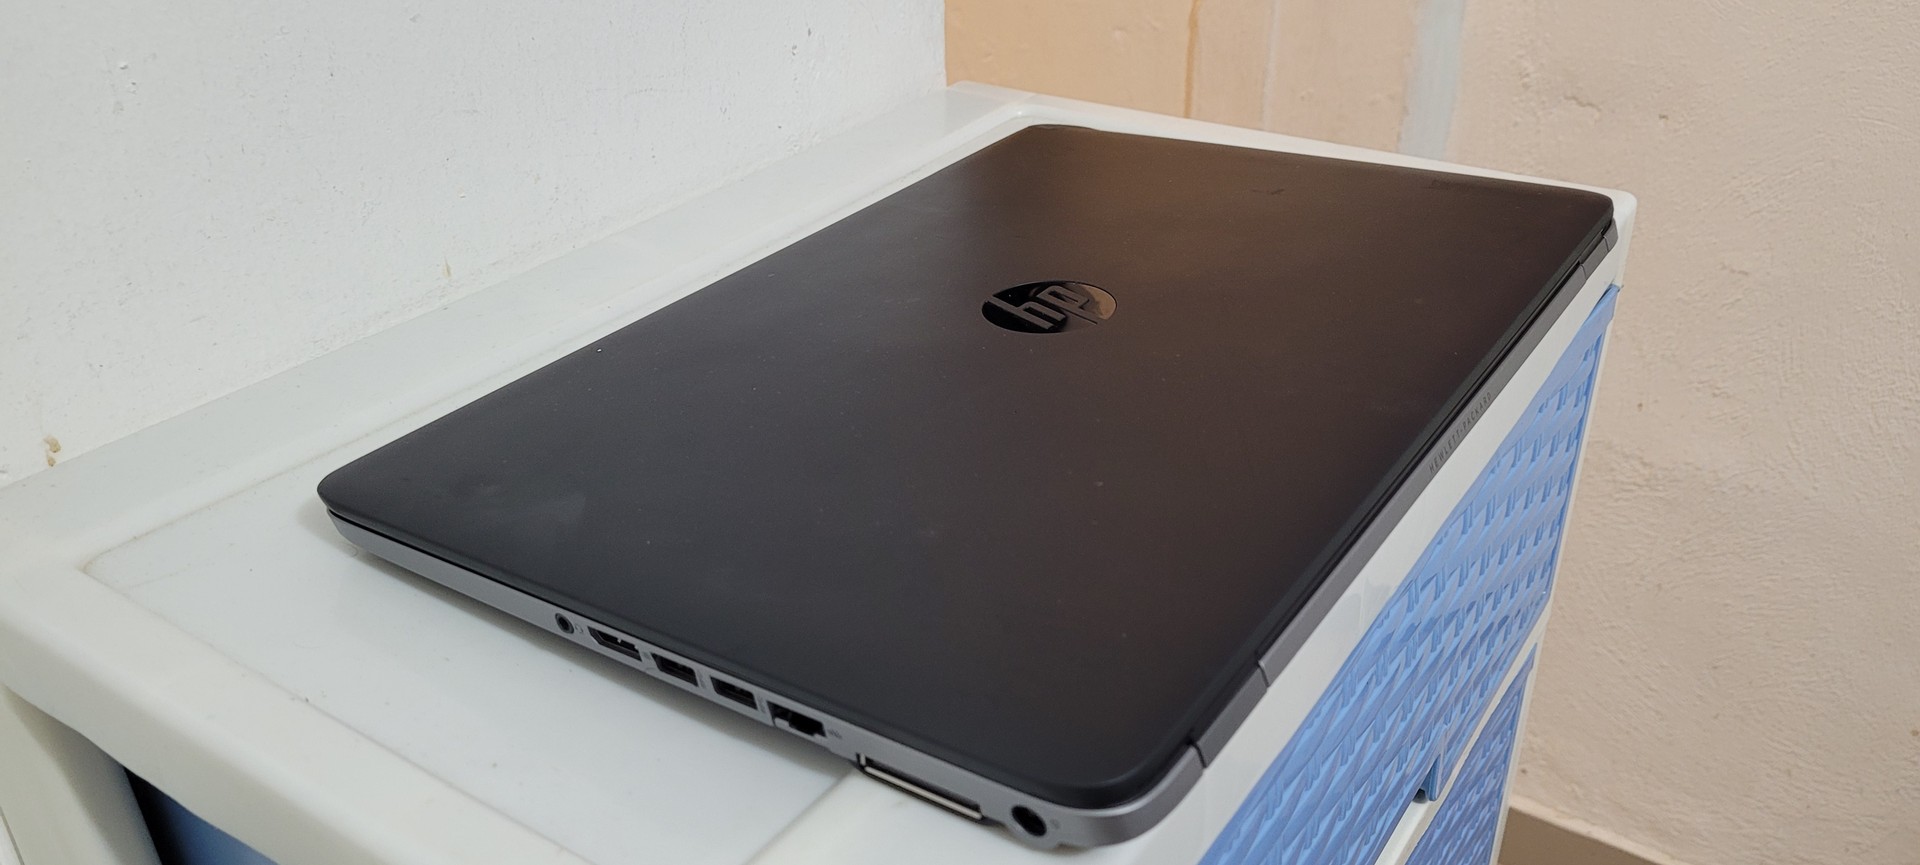 computadoras y laptops - Laptop hp Elitebook 17 Pulg Core i5 Ram 16gb Disco 256gb SSD Video 8gb  2